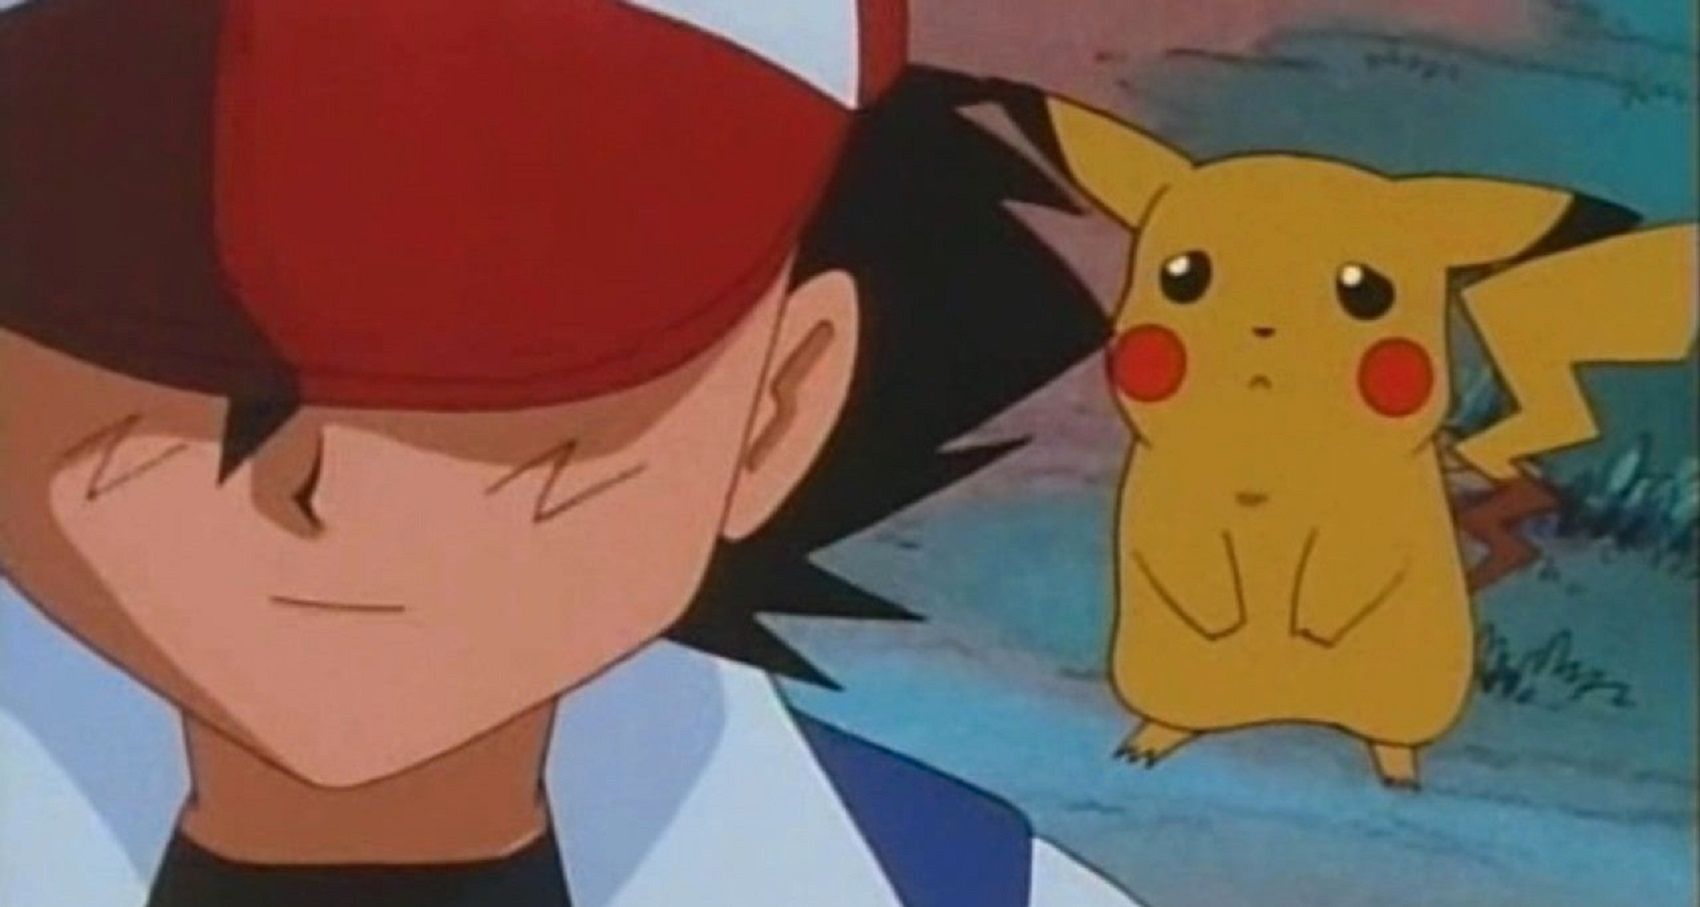 Pokémon 5 Times Ash Was a Complete Jerk (But Learned His Lesson)